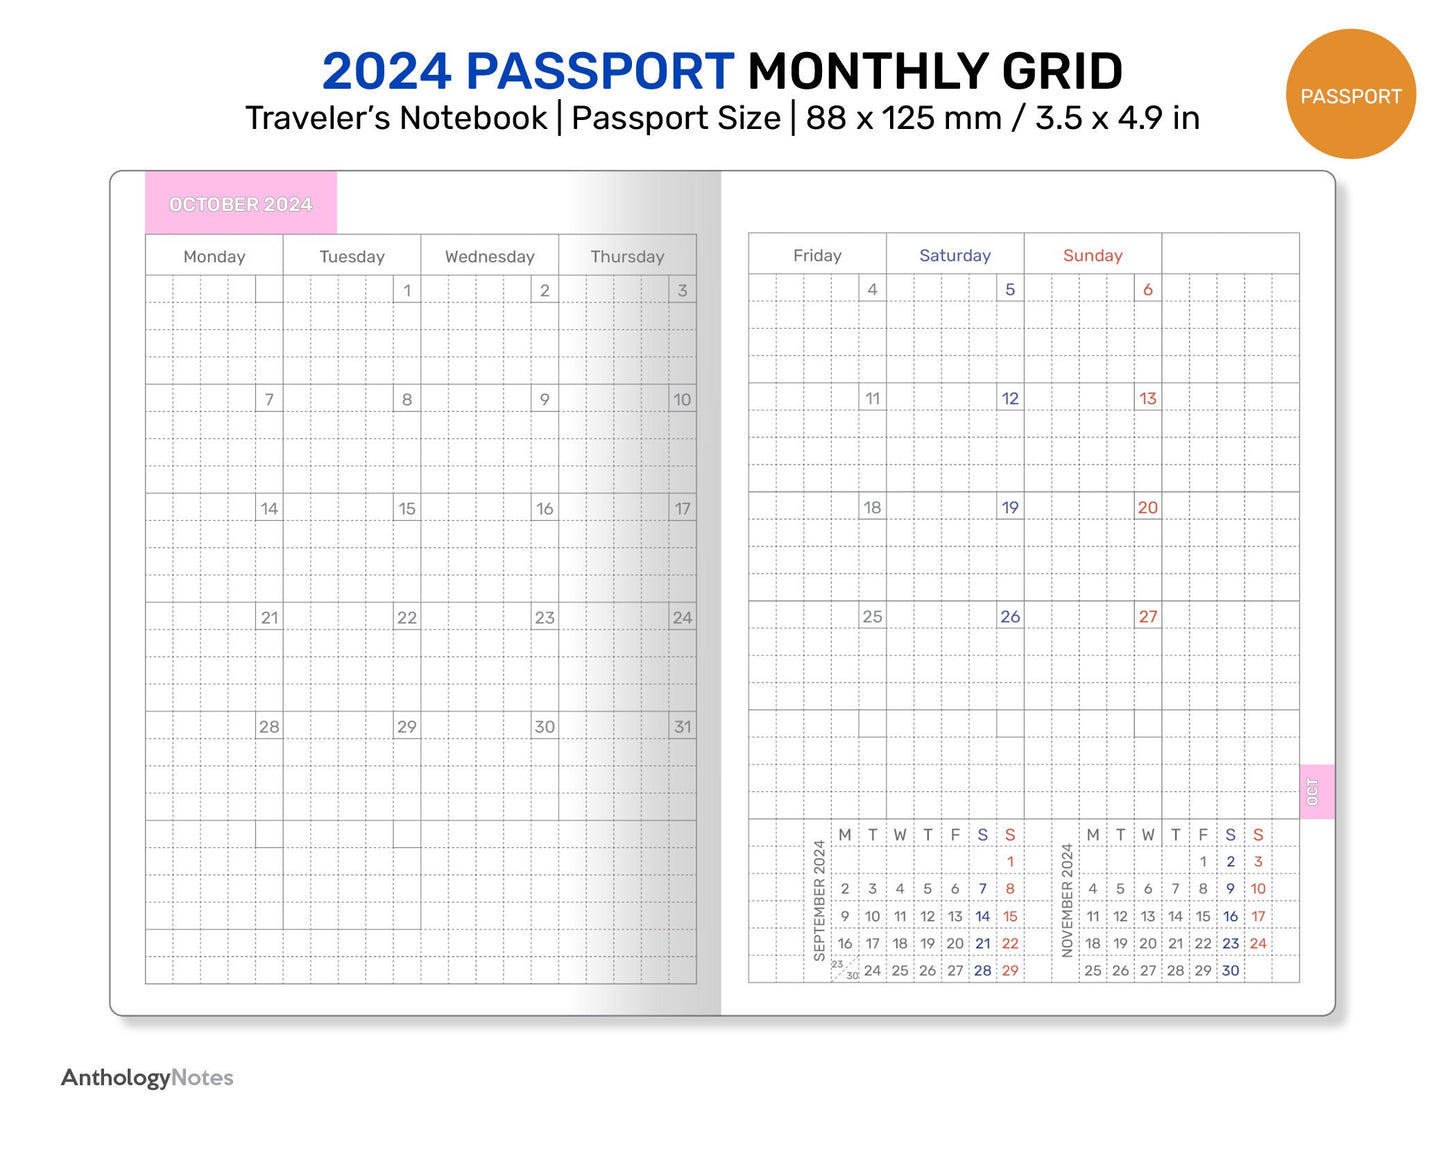 2024 PASSPORT Monthly Diary GRID Traveler's Notebook Printable Insert Mo2P Minimalist DPP003-2024